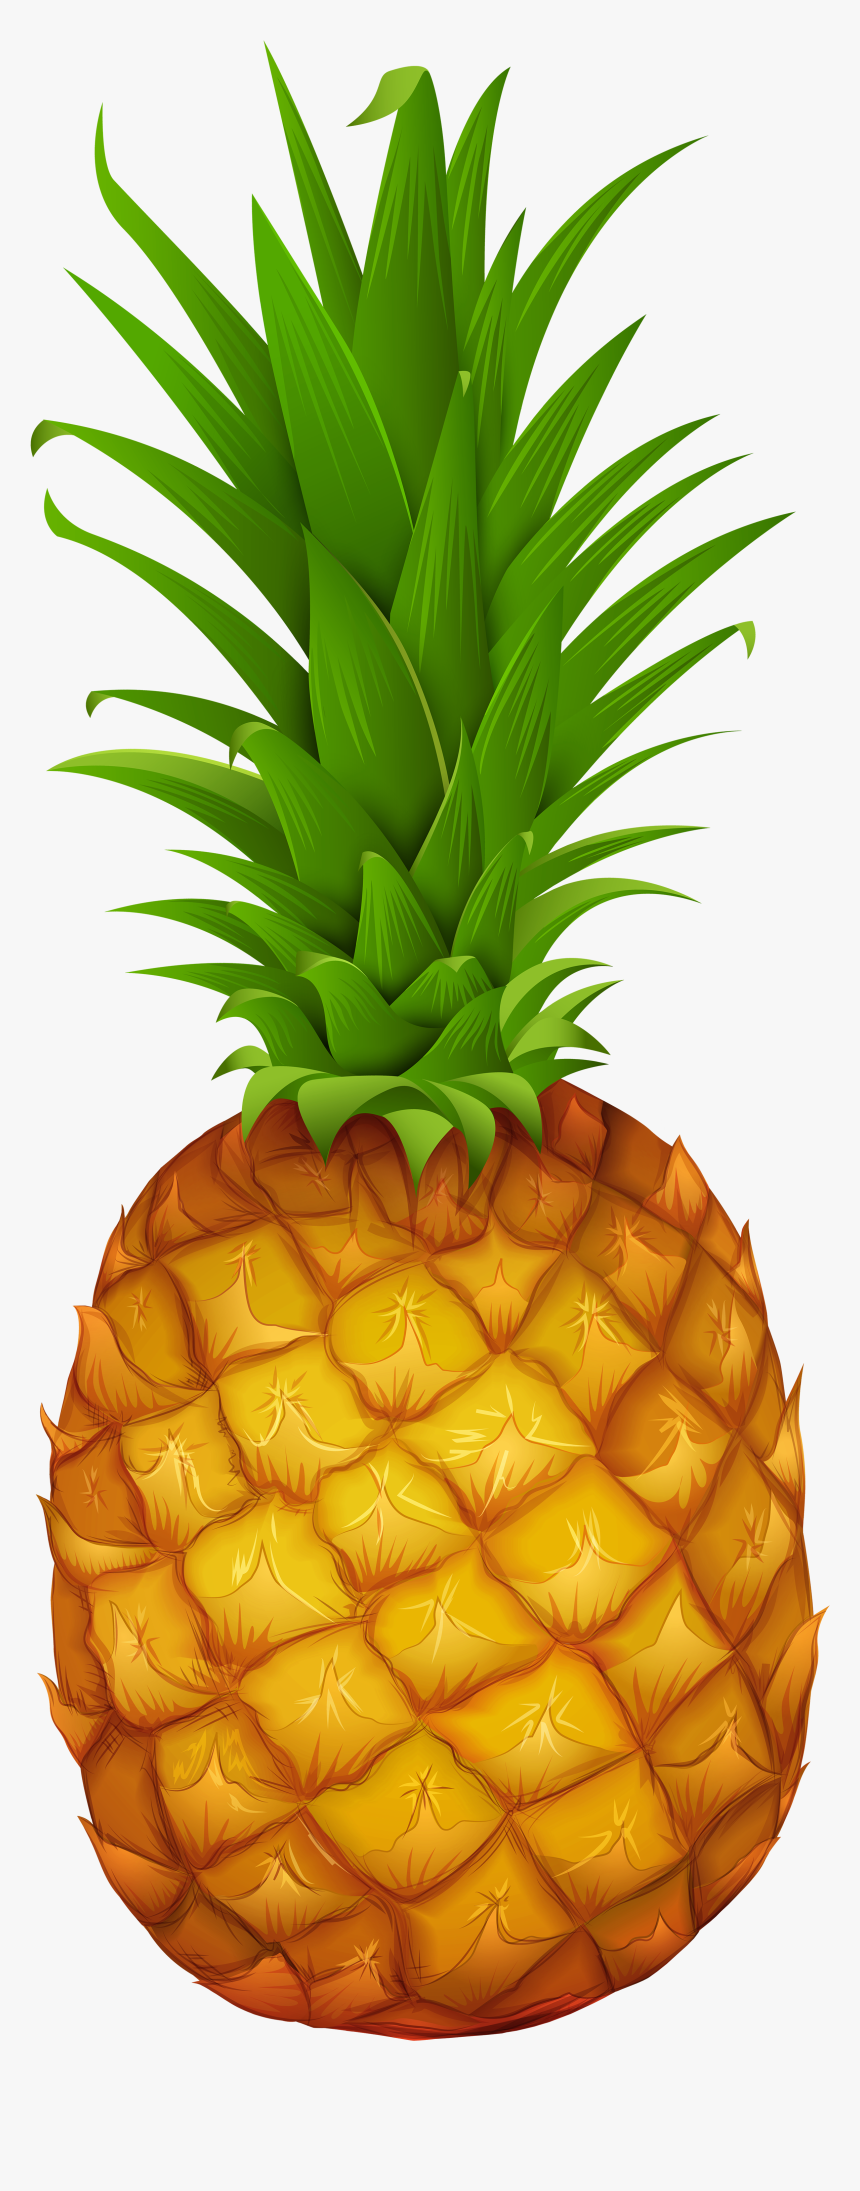 Clip Art Pineapple Gallery Yopri